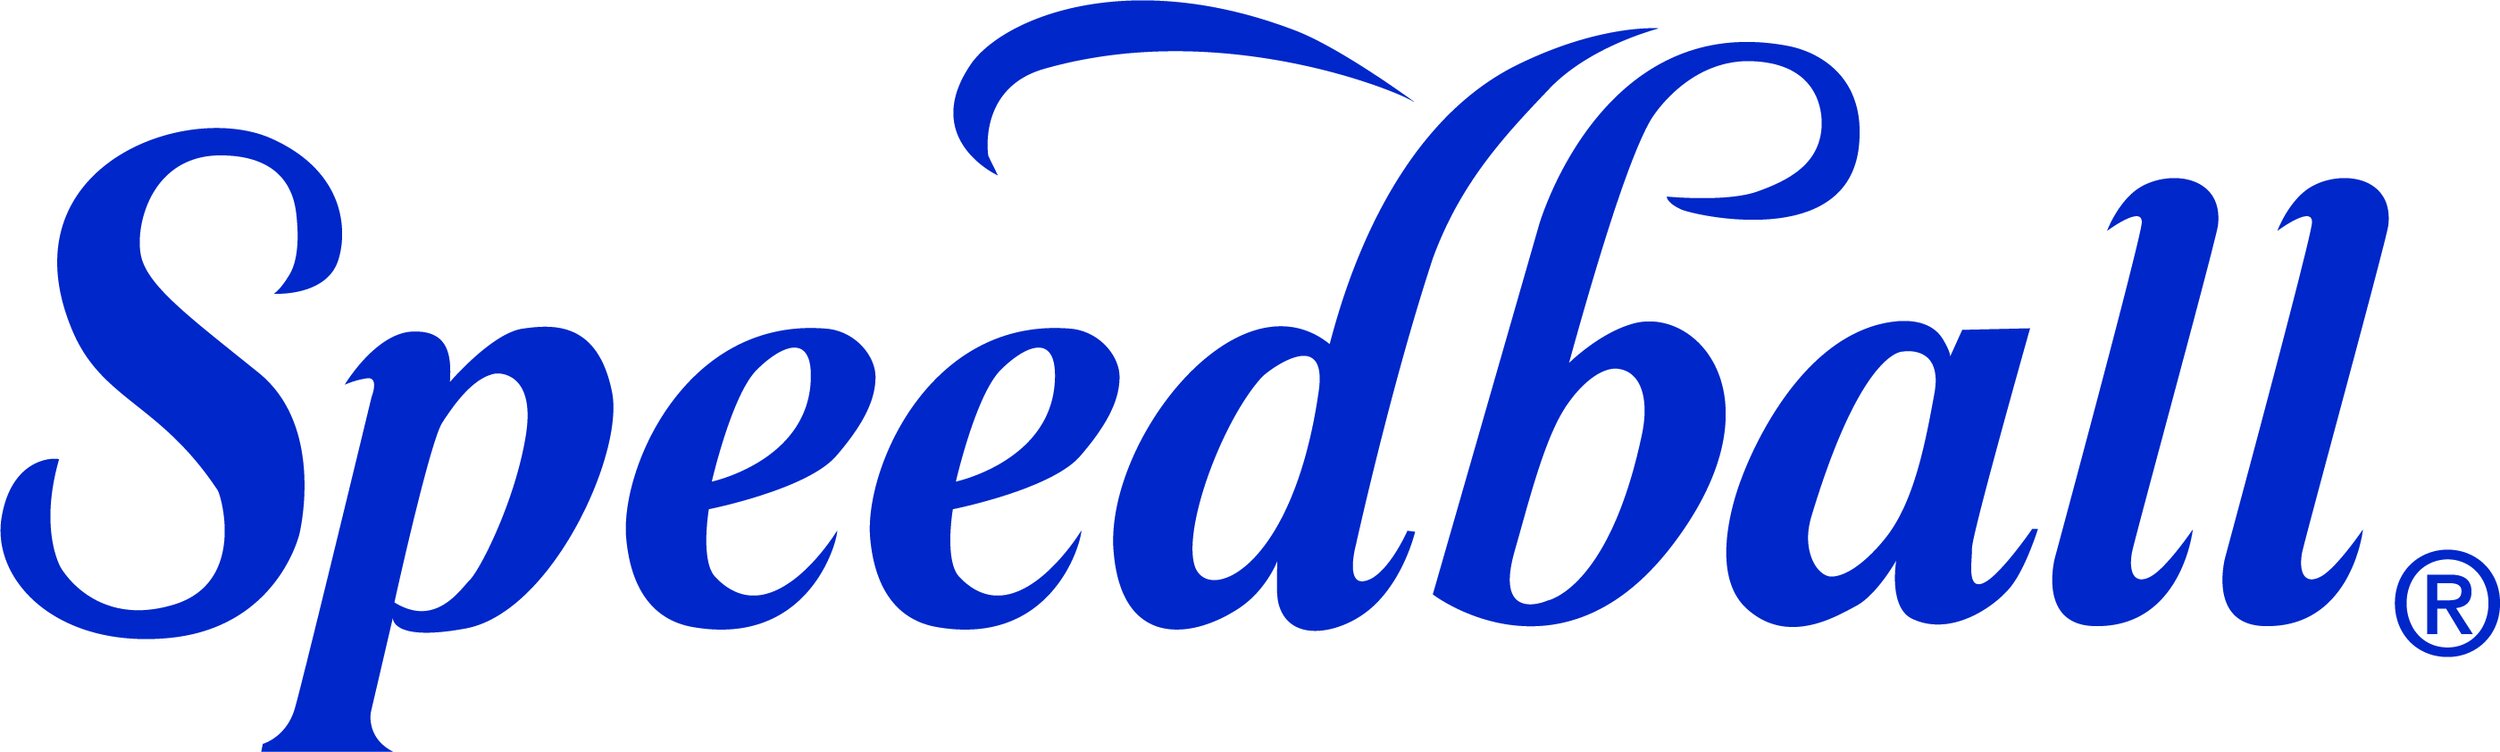 Speedball Logo.jpg